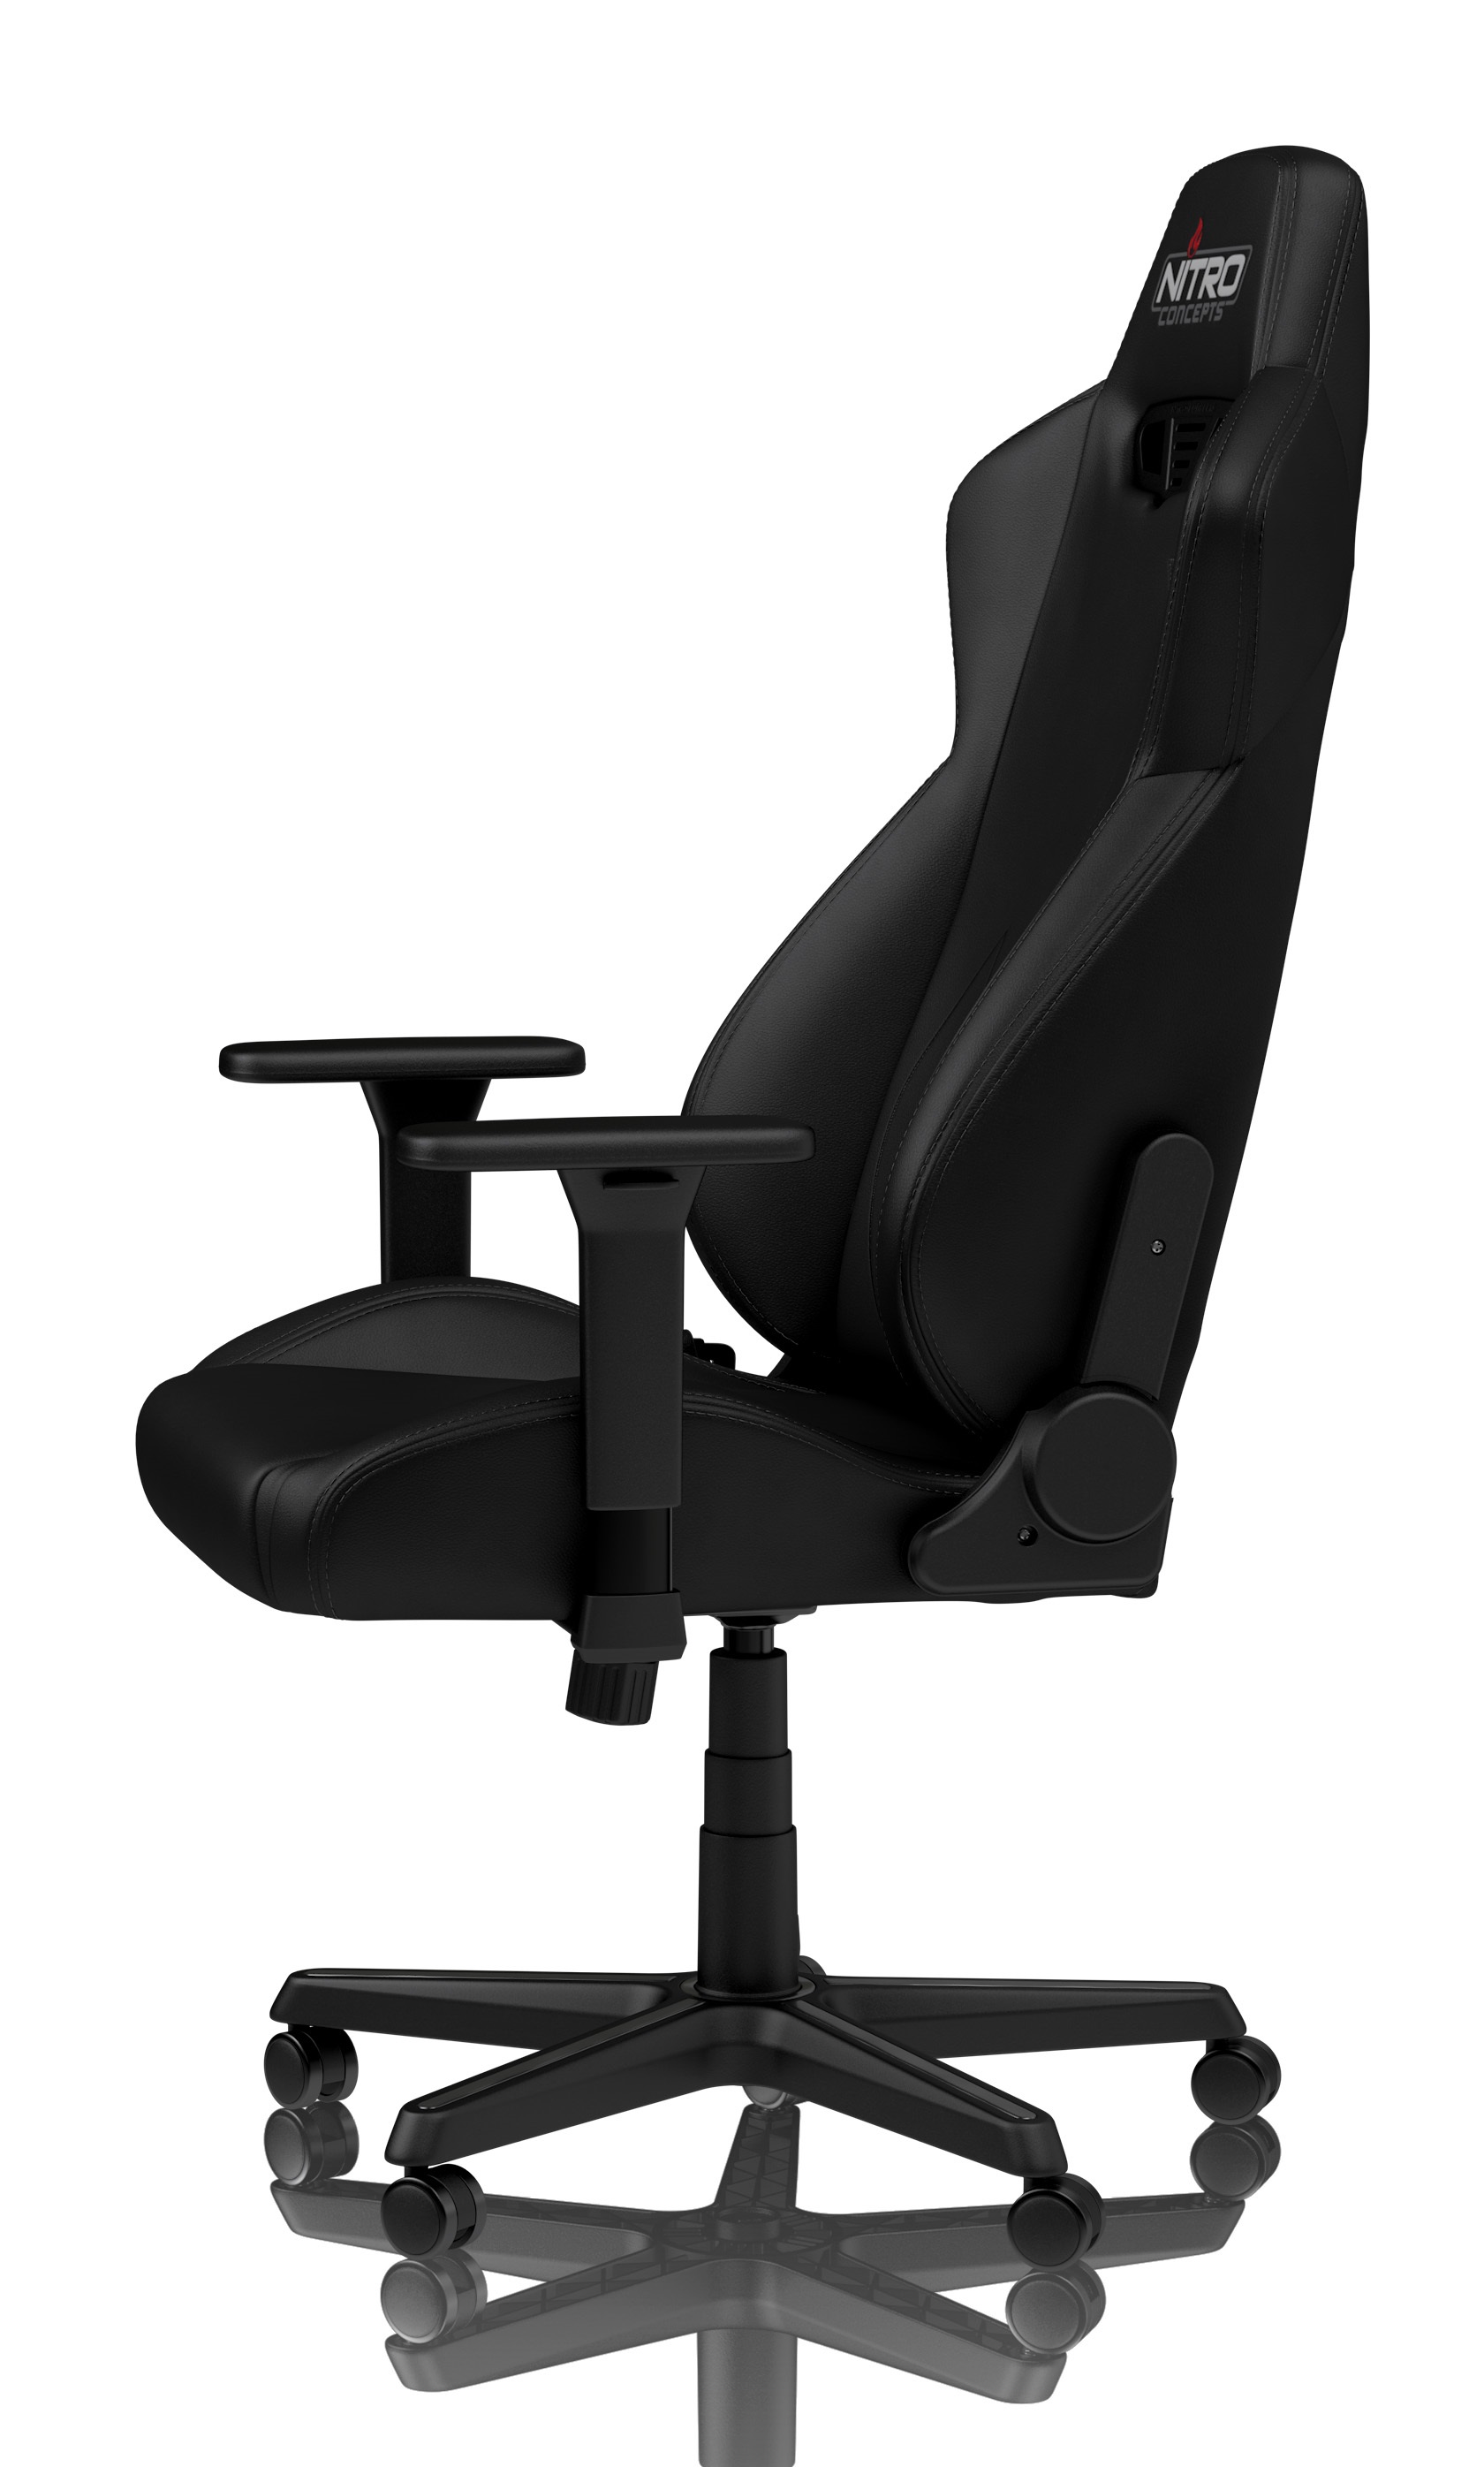 Nitro Concepts - Nitro Concepts S300 EX Gaming Chair - Stealth Black